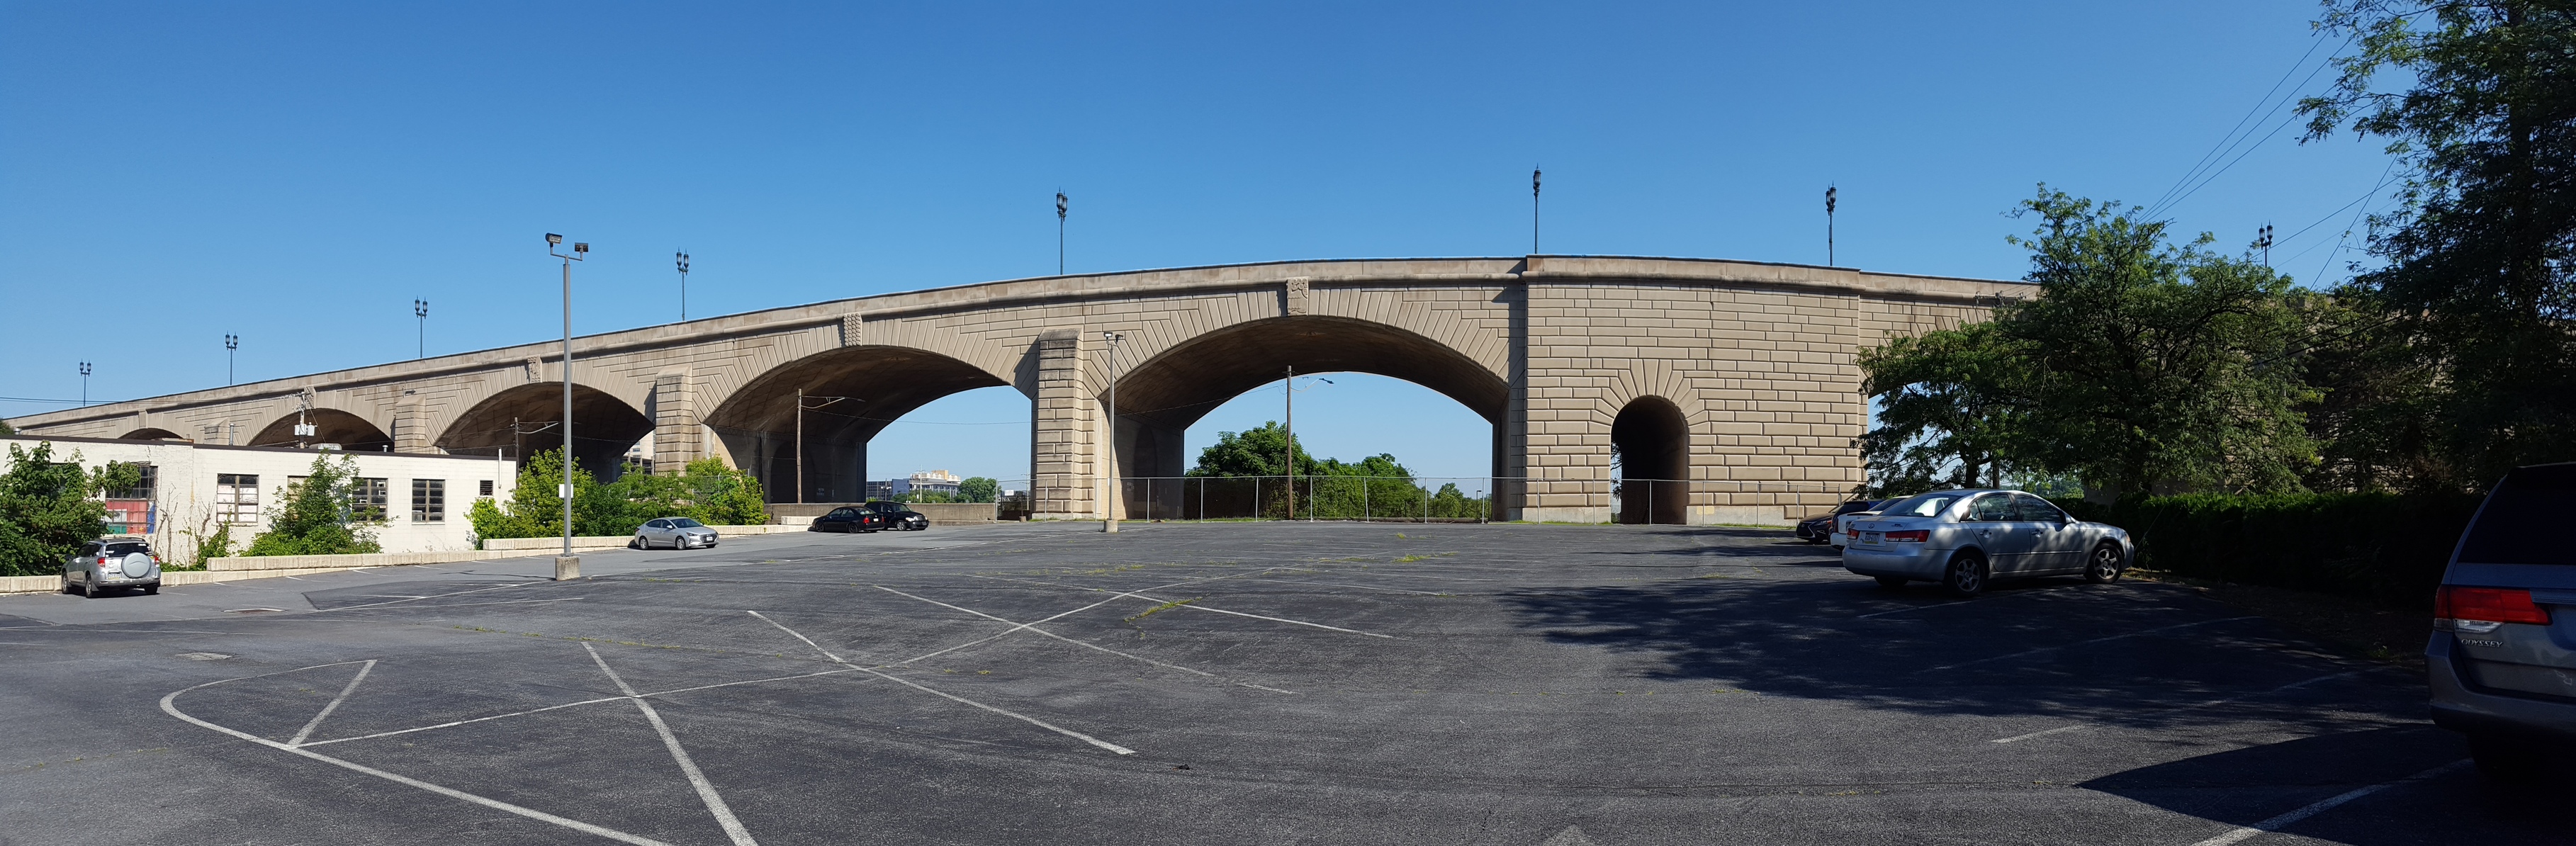 Viaduct in Harrisburg, PA